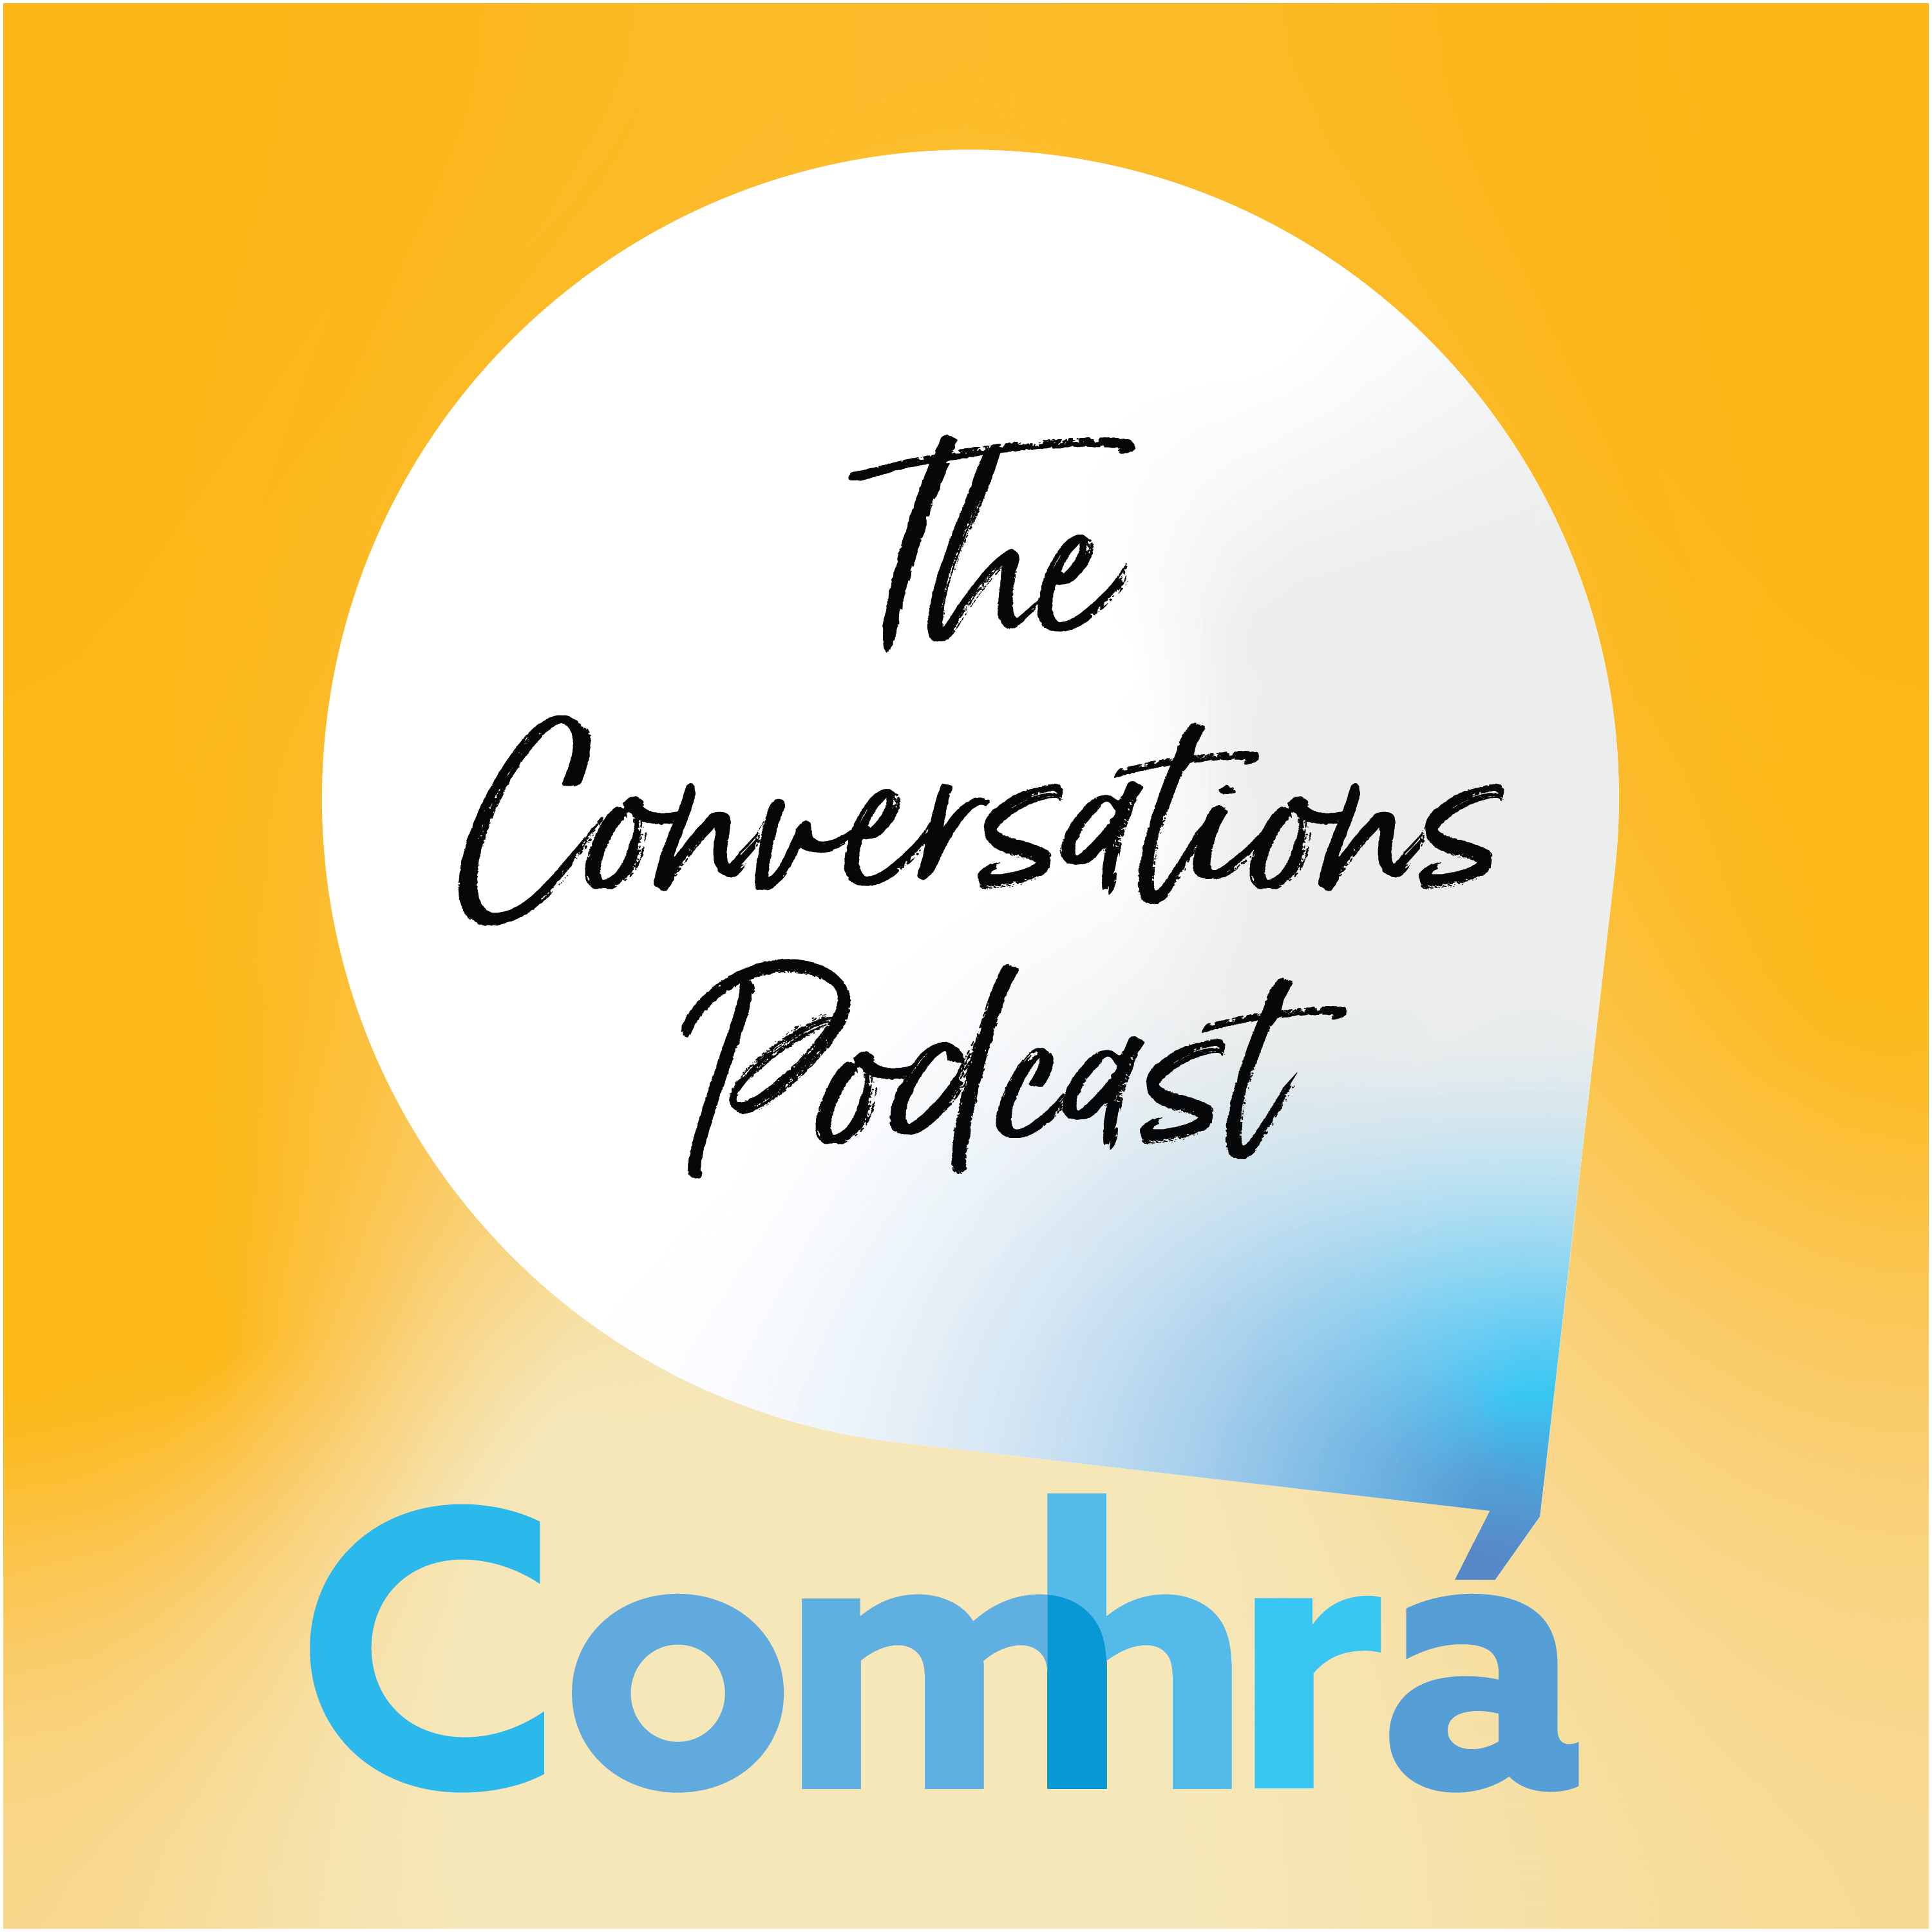 Comhrá - The Conversations Podcast